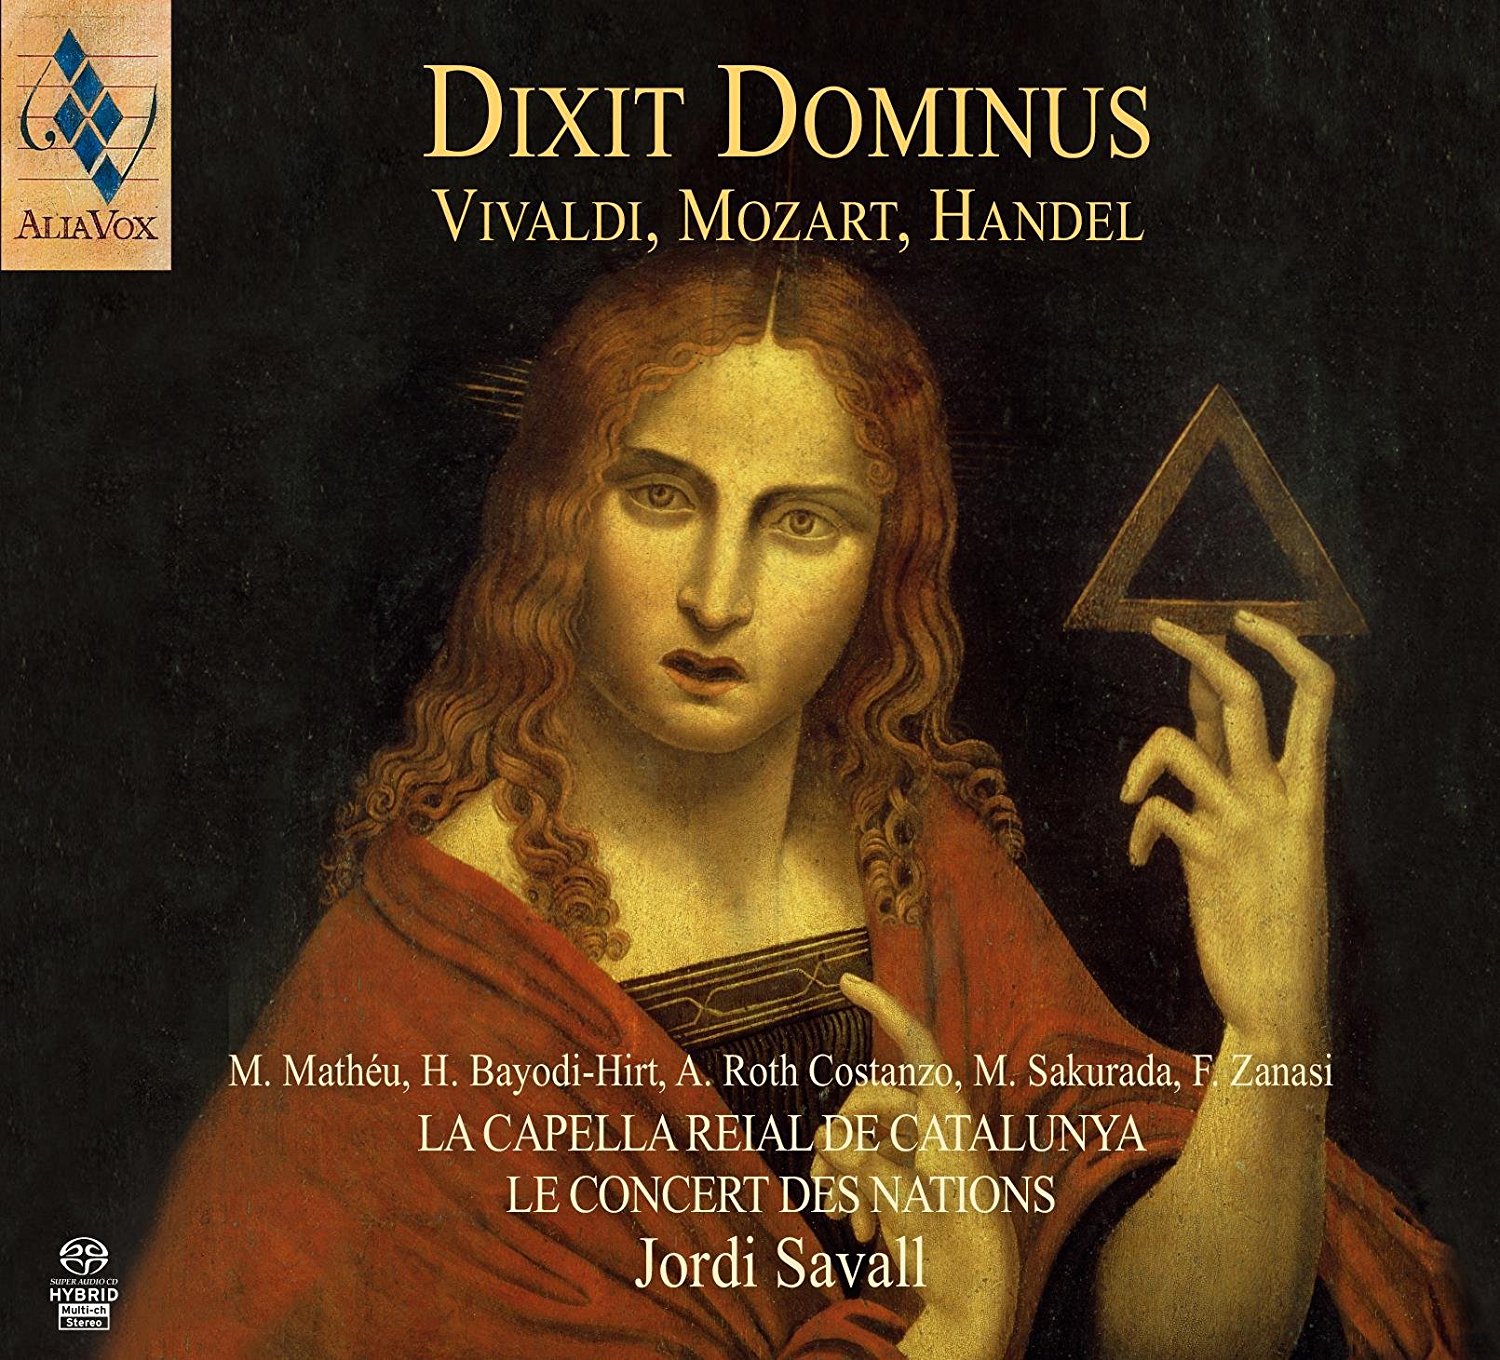 Dixit Dominus: Vivaldi, Mozart, Handel - SACD | Le Concert des Nations, La Capella Reial de Catalunya, Antonio Vivaldi, Wolfgang Amadeus Mozart, Georg Friedrich Handel, Jordi Savall